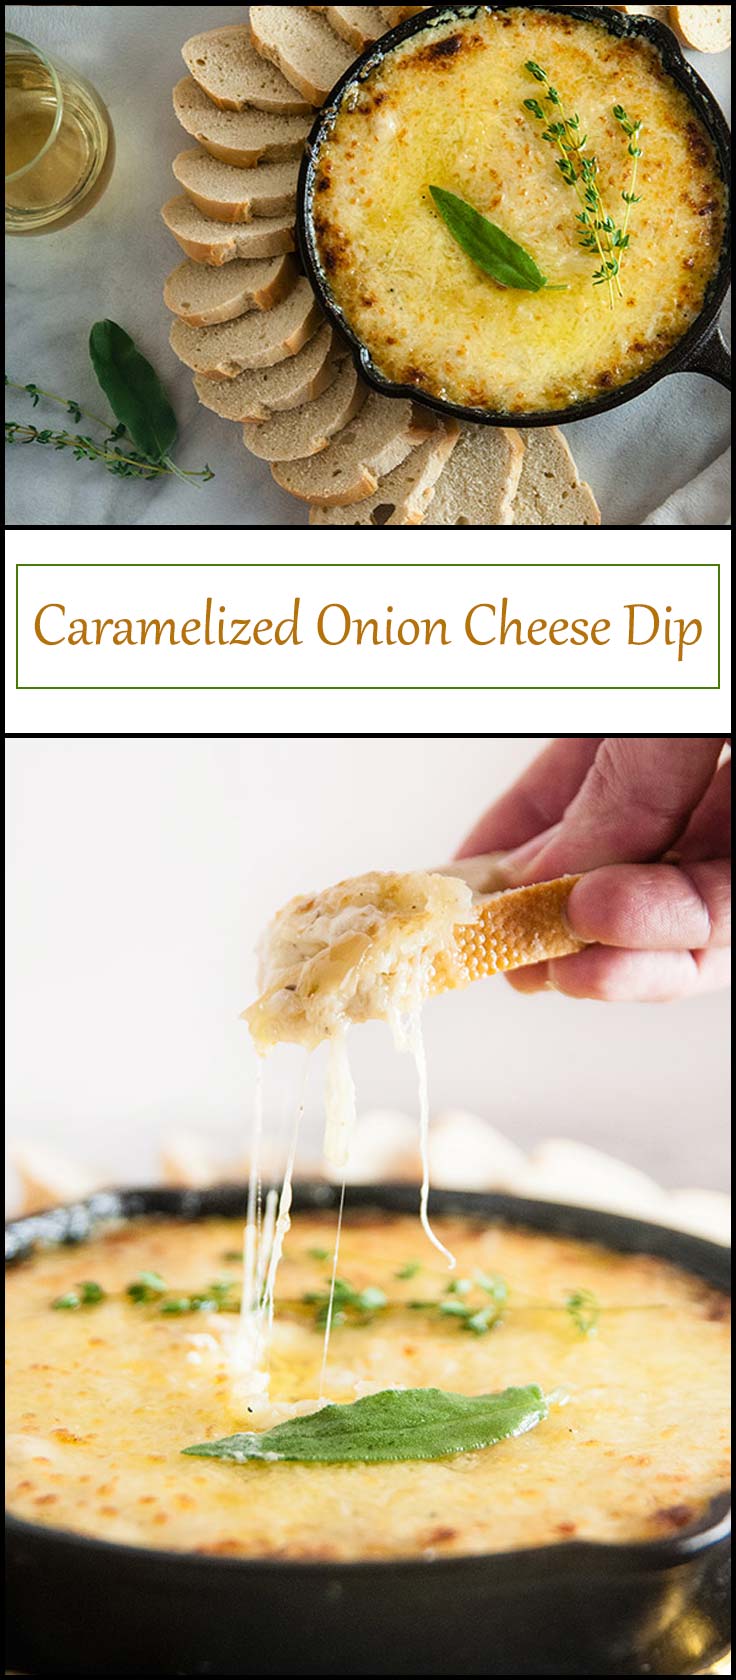 Caramelized Onion Cheese Dip from www.seasonedsprinkles.com